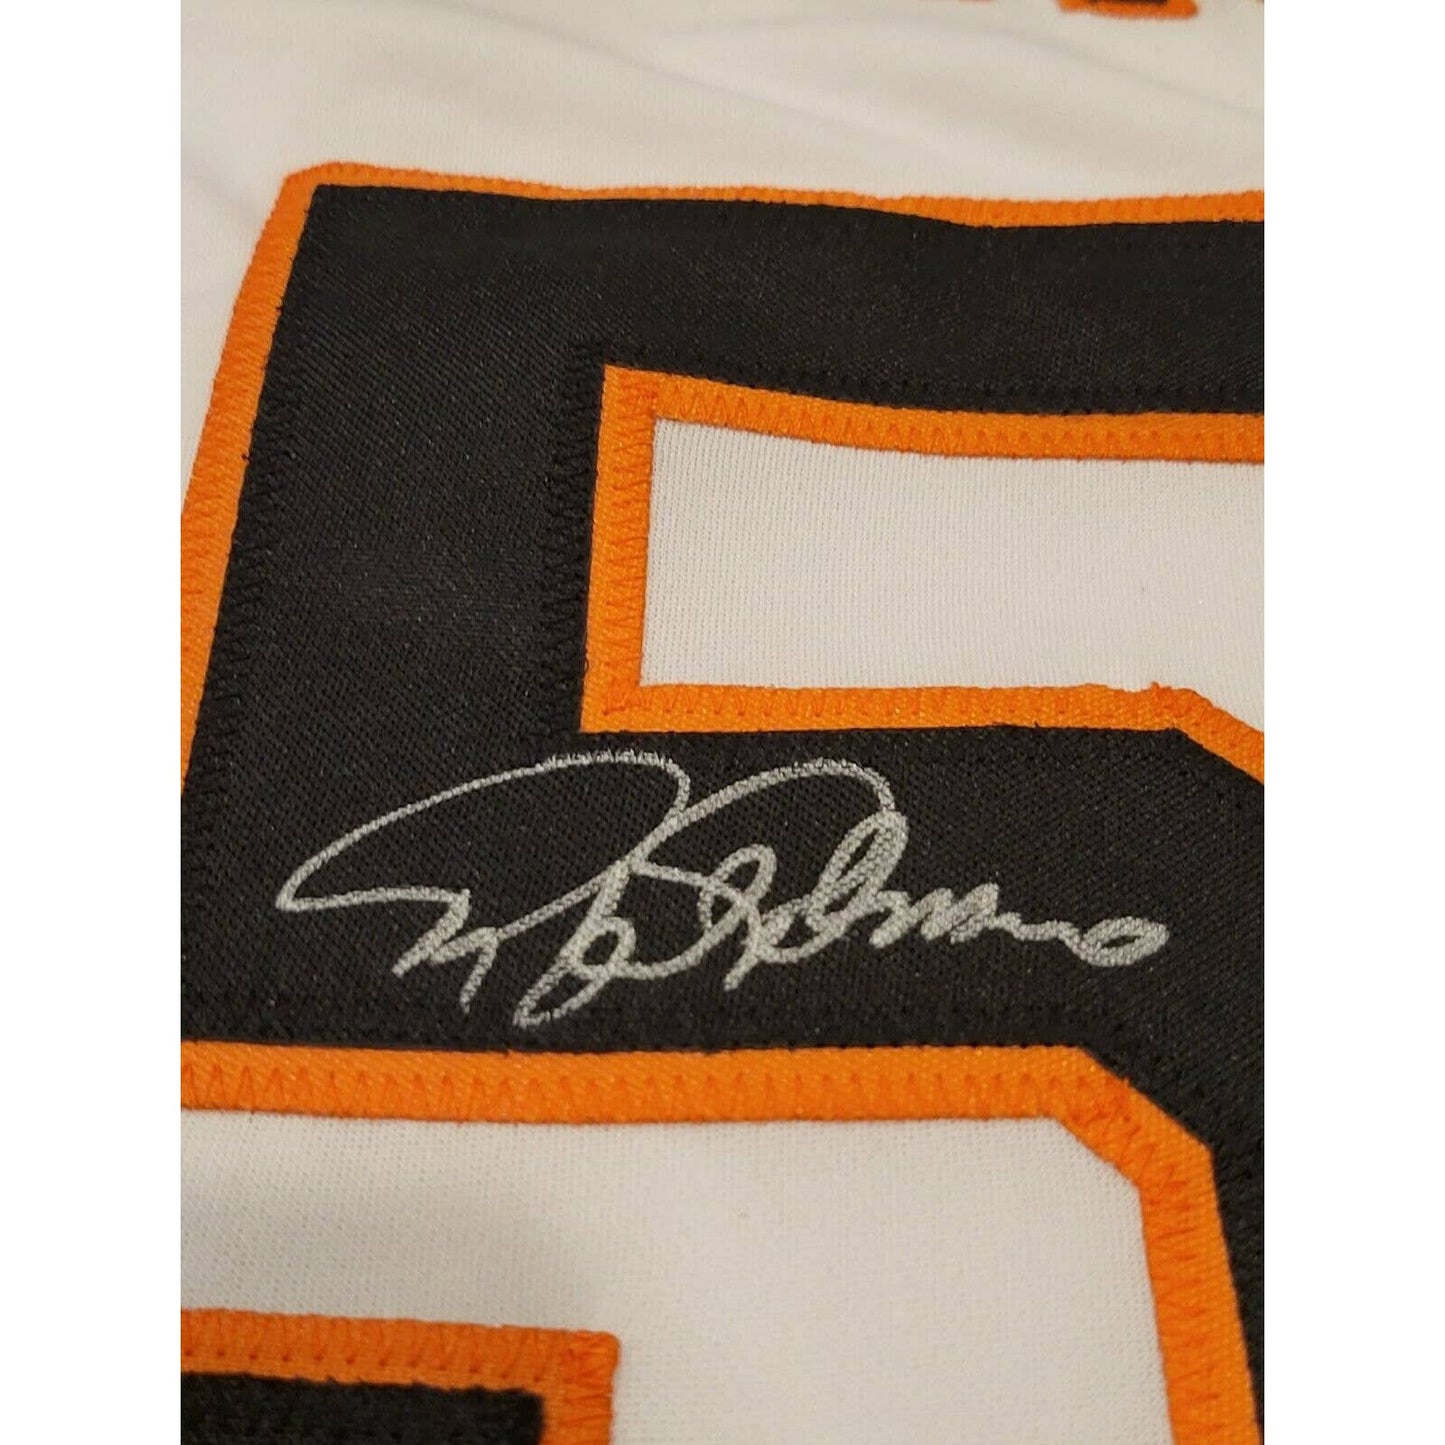 Rafael Palmeiro Autographed/Signed Jersey JSA COA Baltimore Orioles Palmeiero - TreasuresEvolved